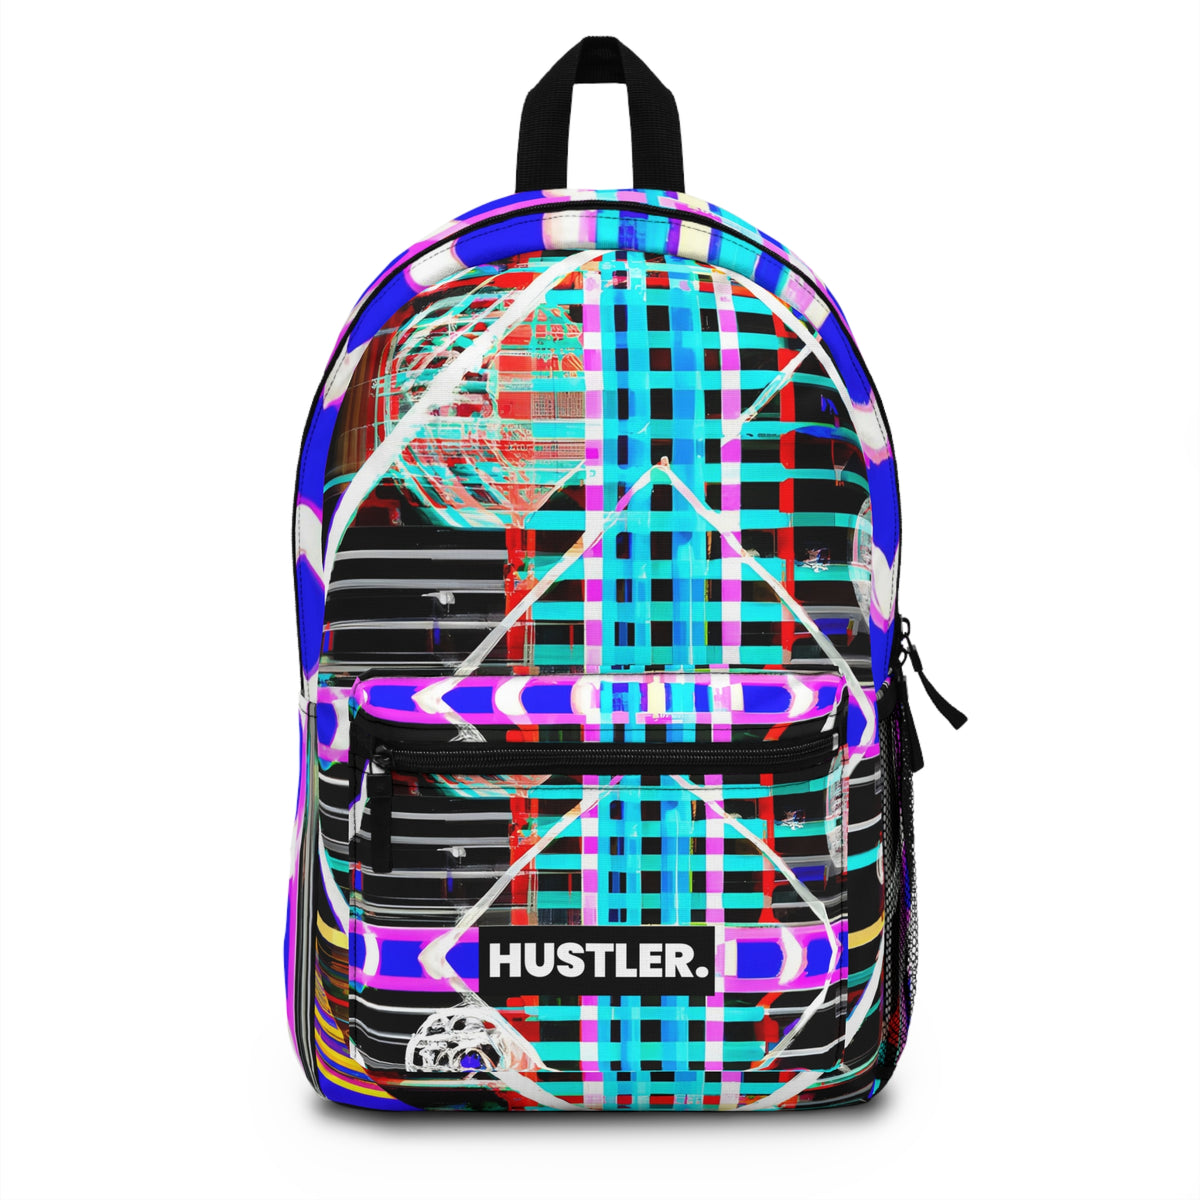 CyberStarr - Hustler Backpack